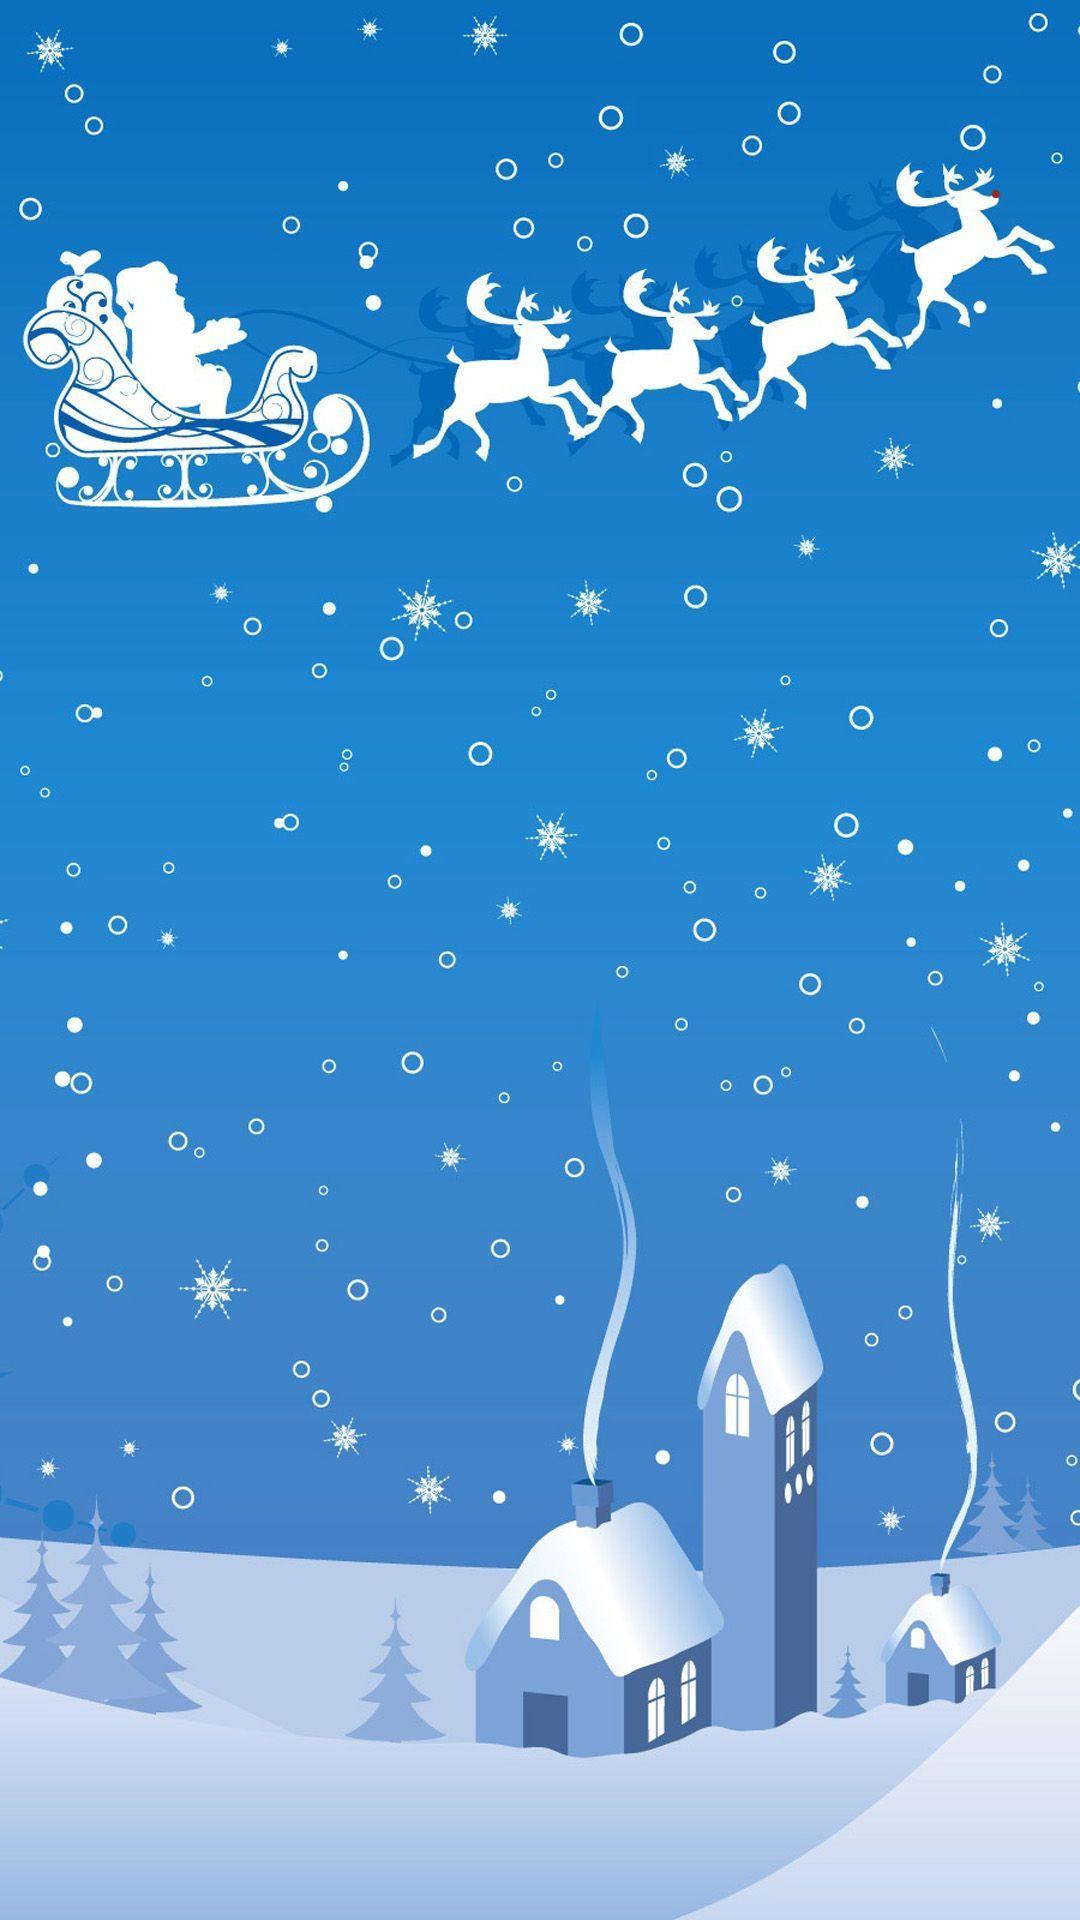 Samsung Galaxy Wallpaper Christmas. Christmas theme blue background